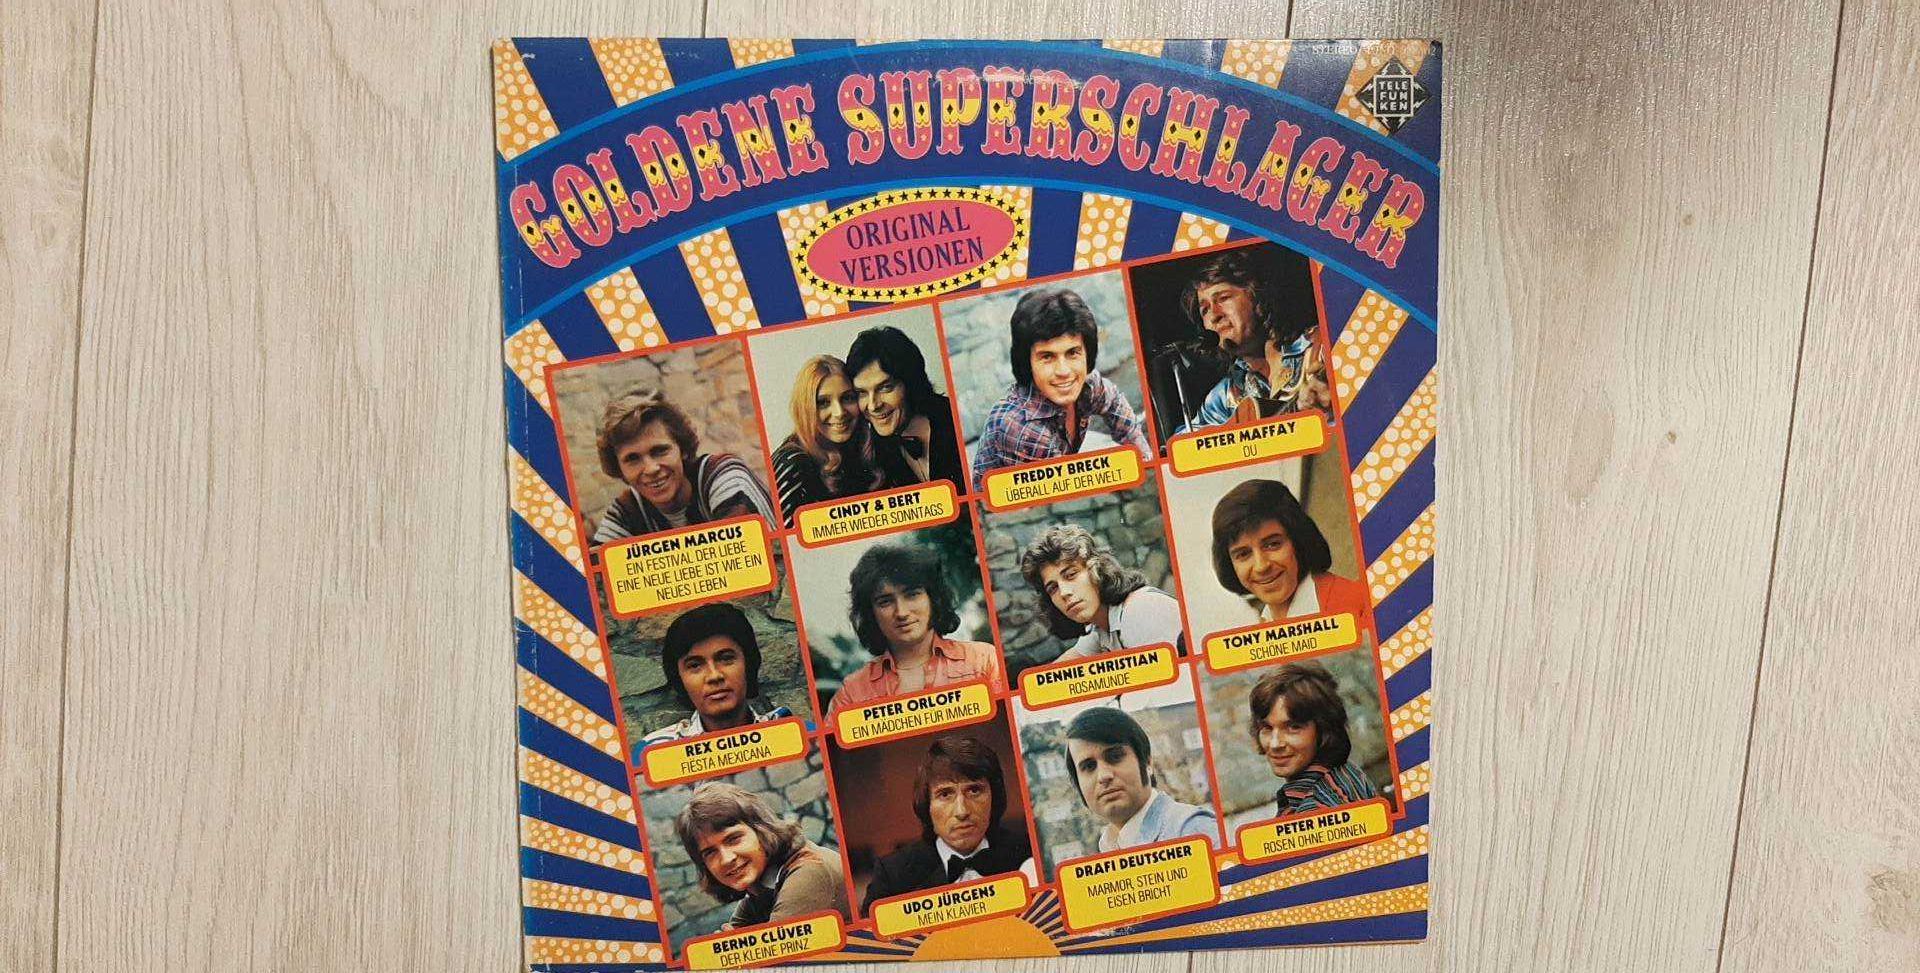 Goldene Superschlager (muzyka niemiecka)- płyta winylowa